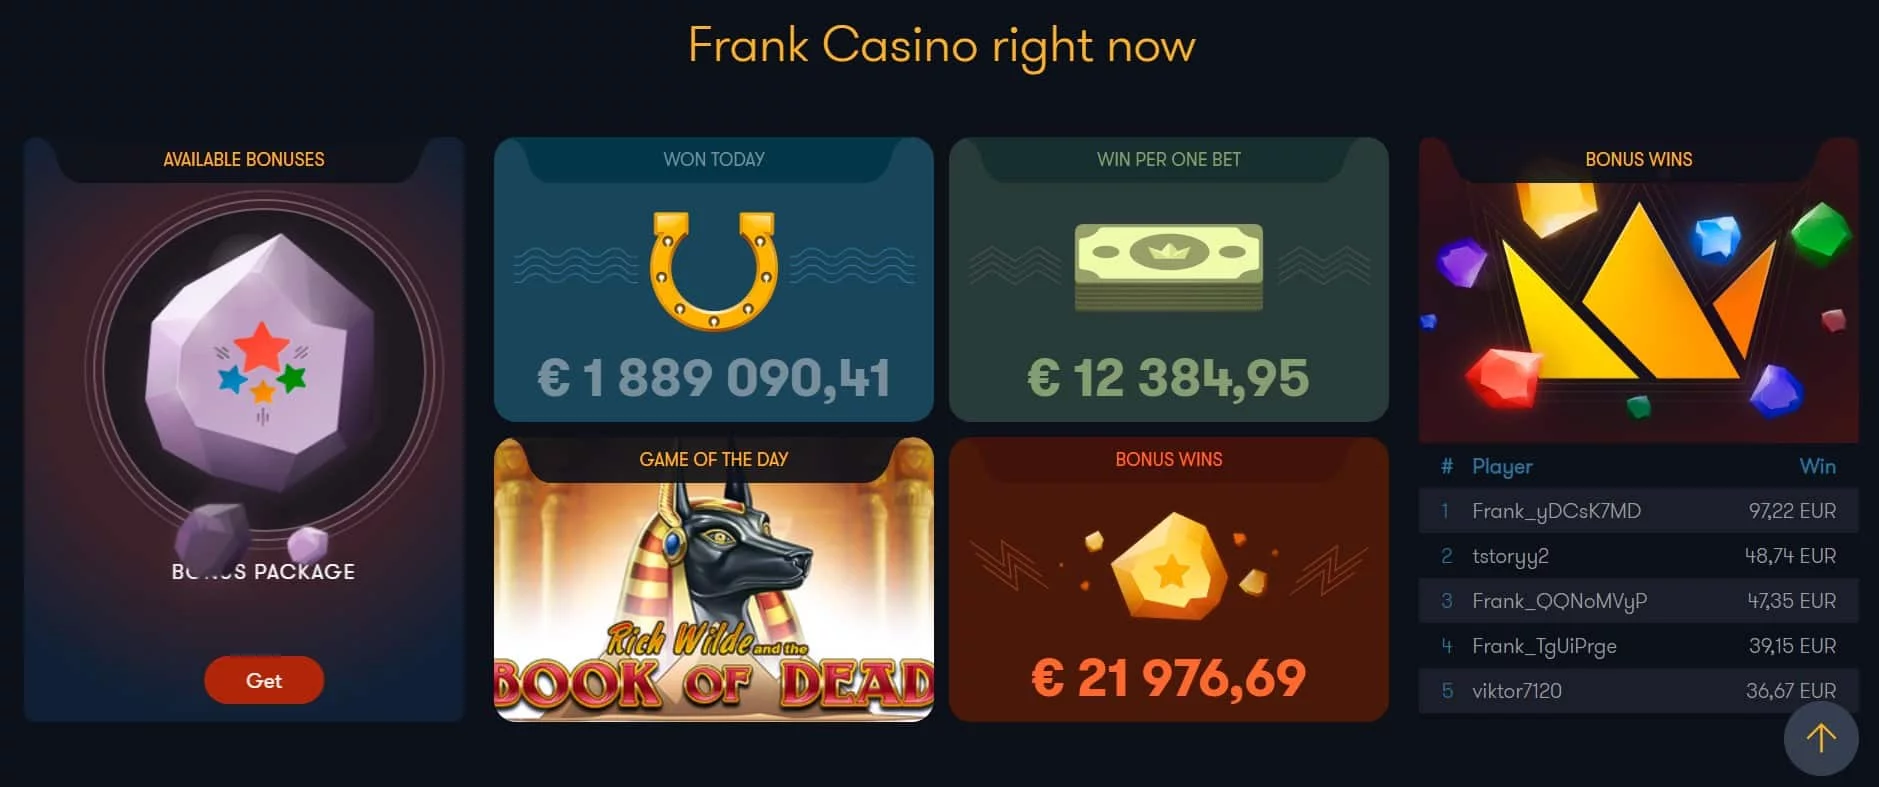 frank casino right now